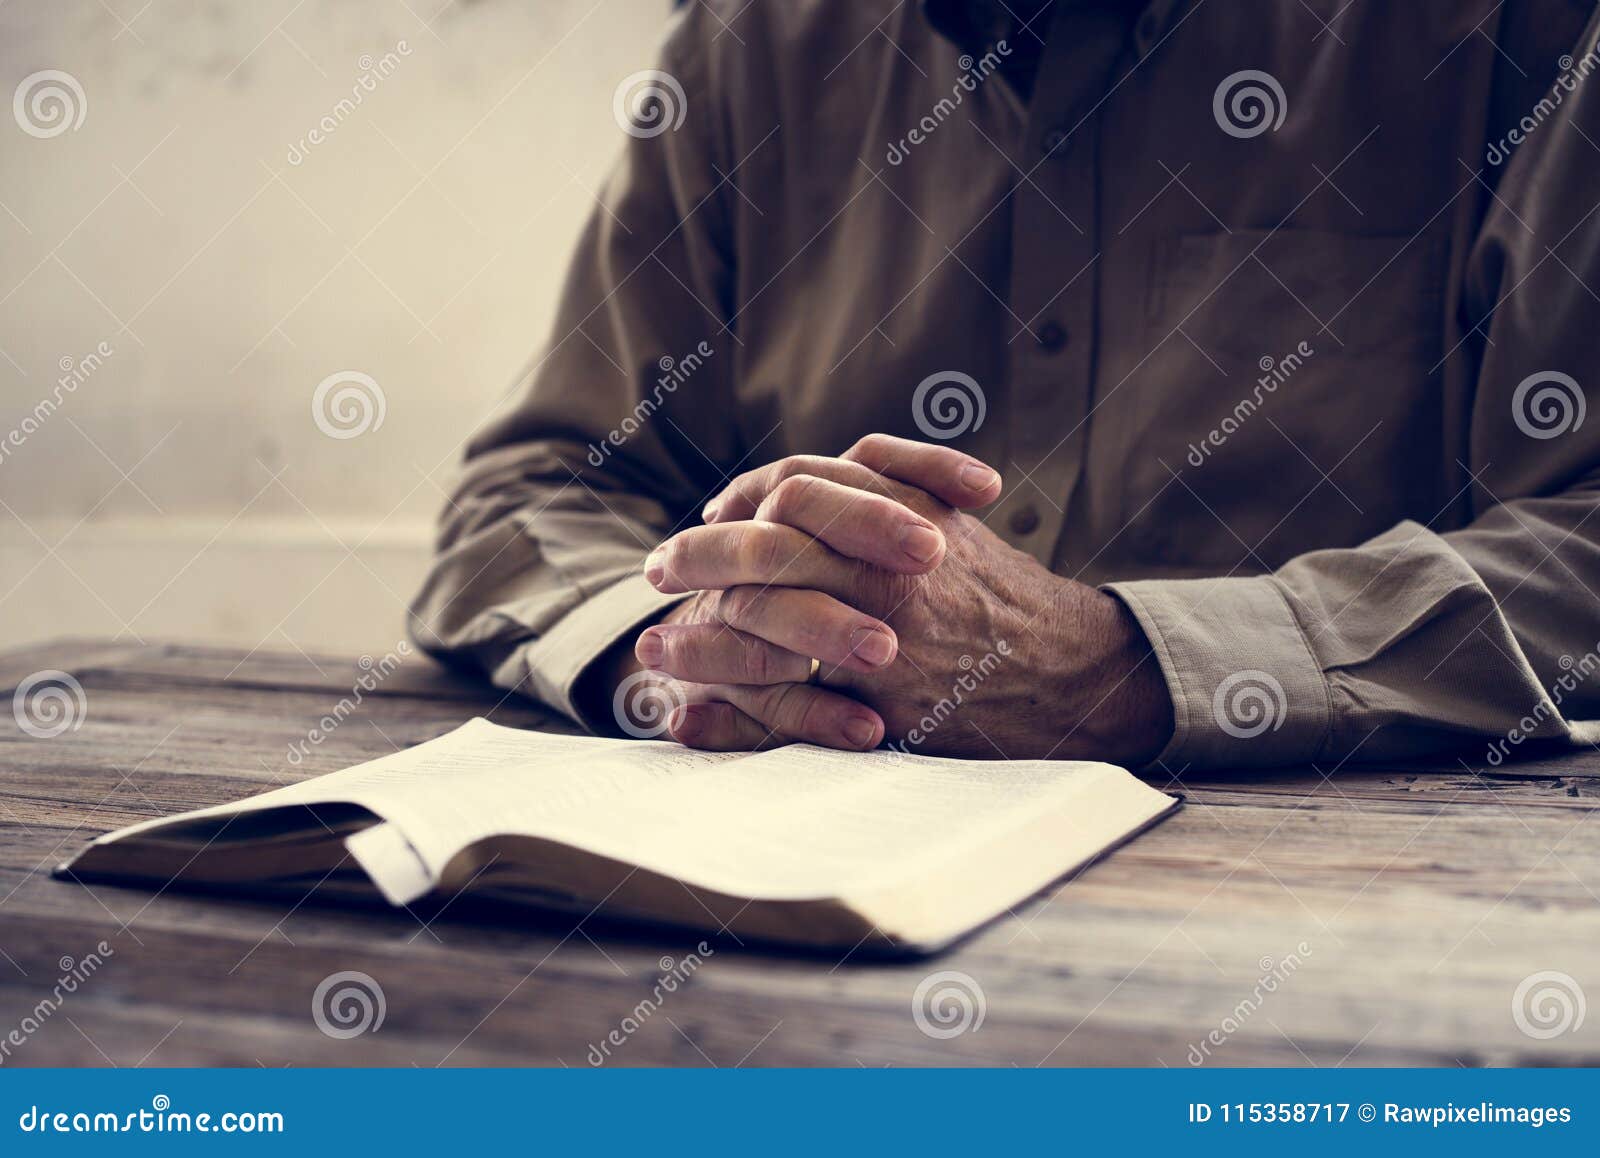 hands prayer faith in christianity religion